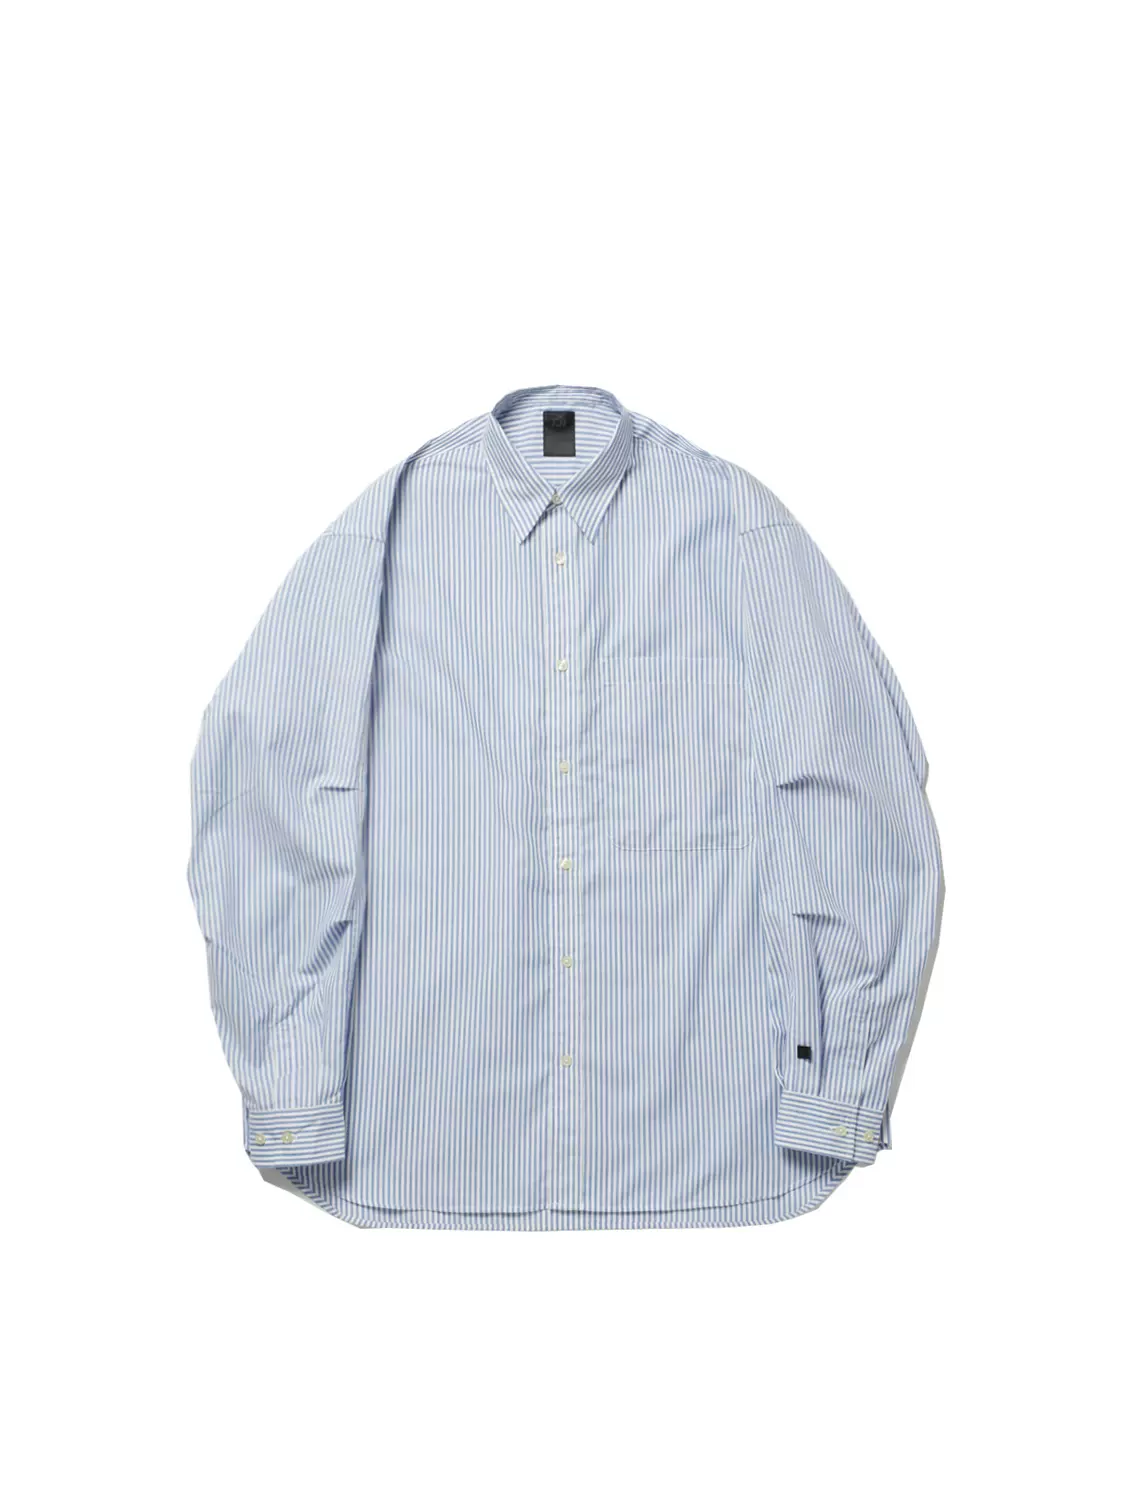 DAIWA PIER39 TECH BUTTON DOWN SHIRTS L/S OXFORD 23SS條紋襯衫-Taobao